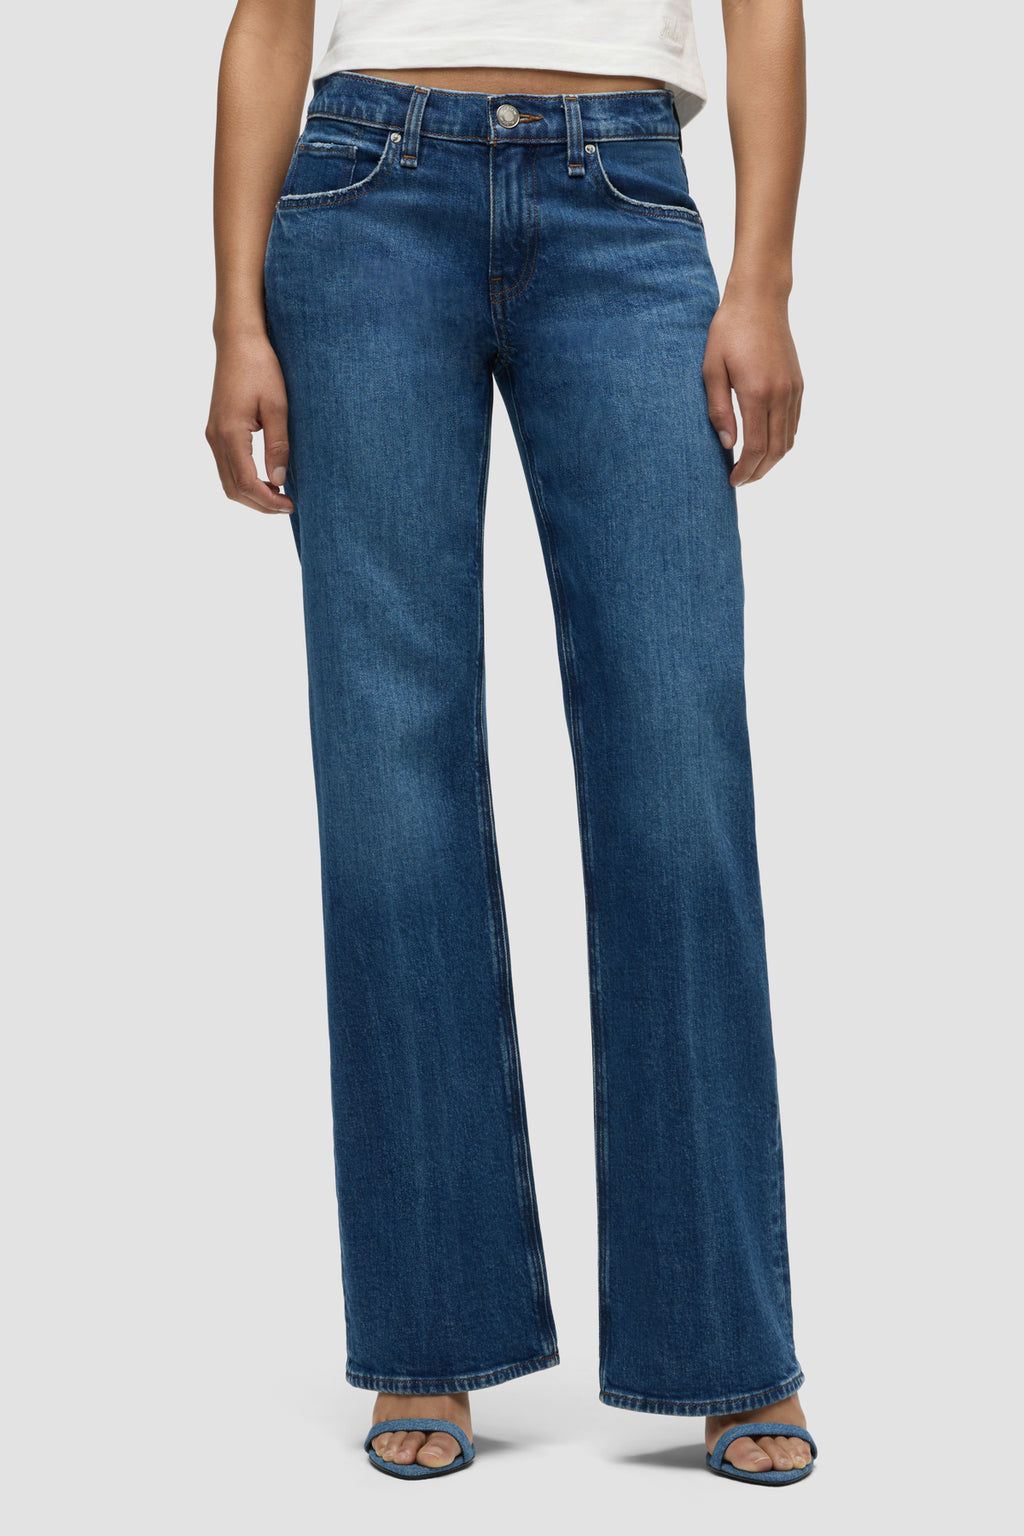 Hudson Jeans Solid Blue Jeans 29 Waist - 85% off